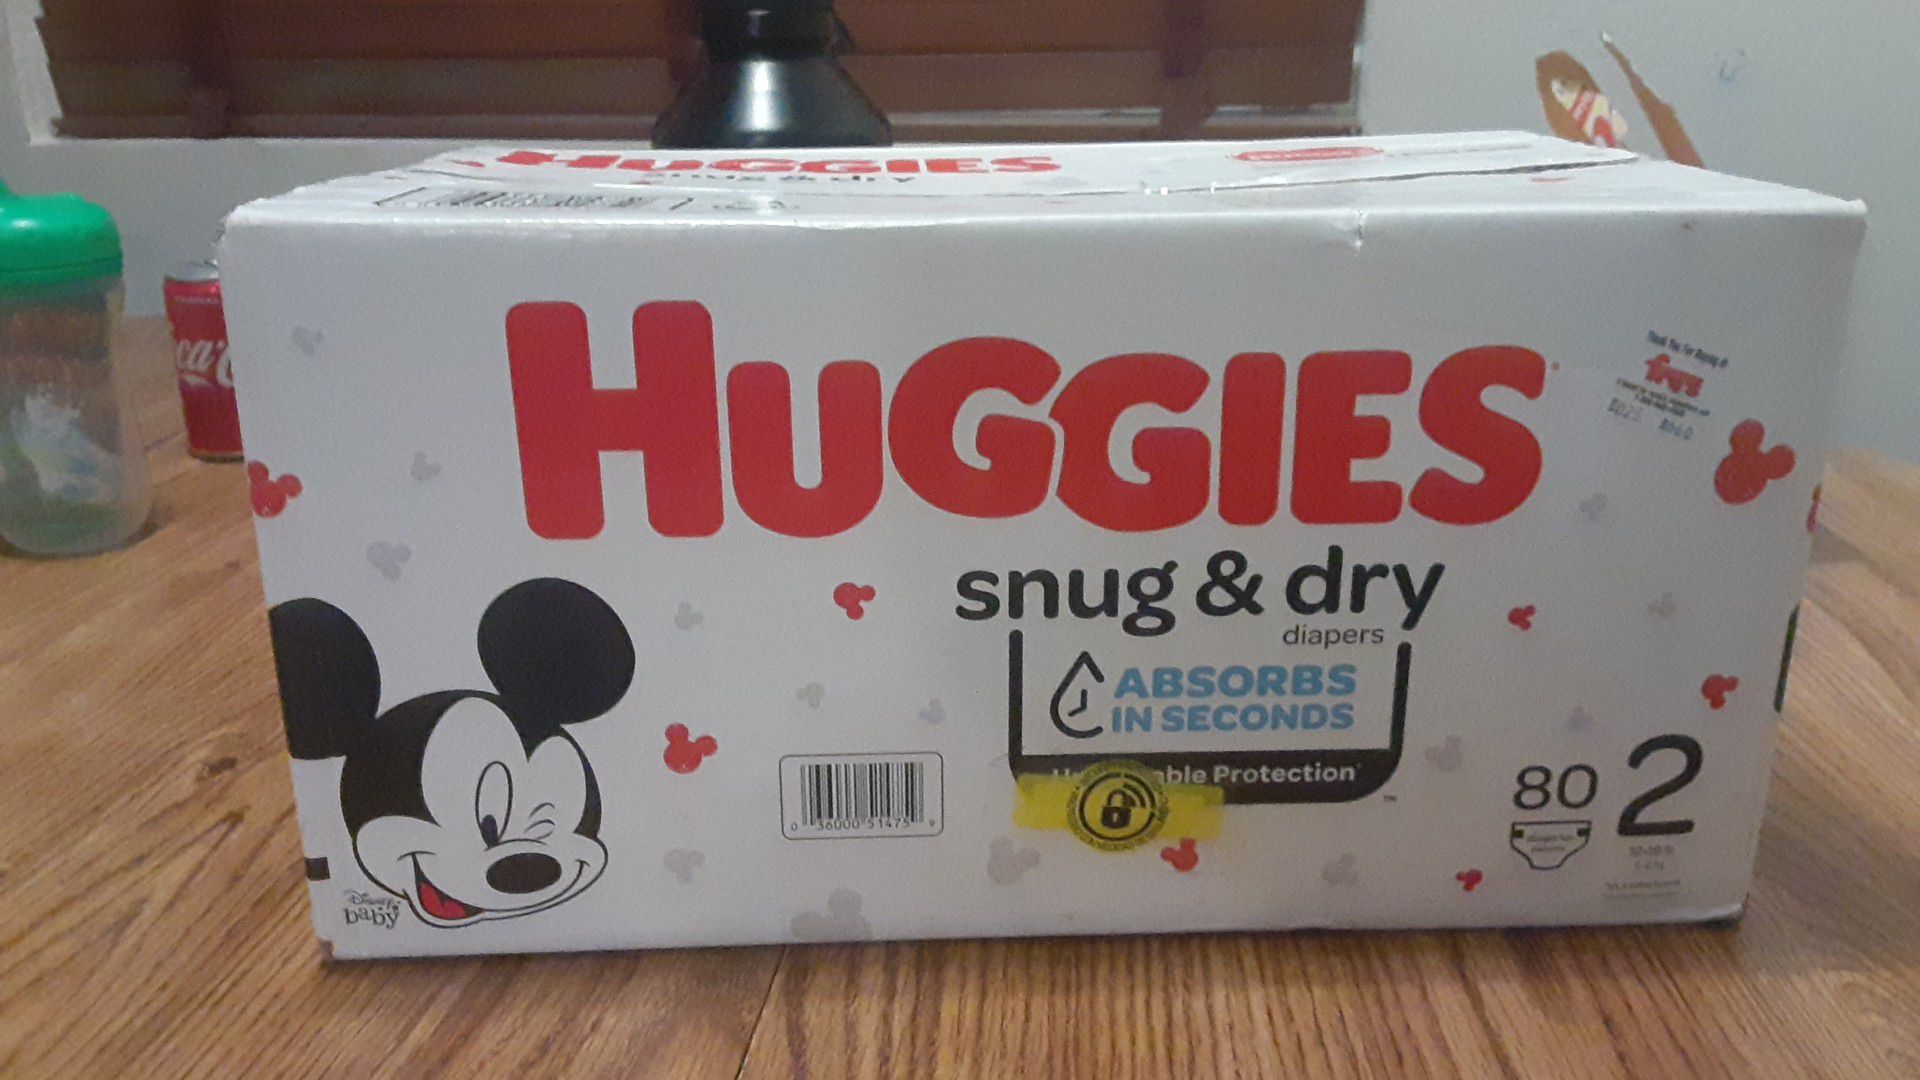 Huggies snug & dry size 2